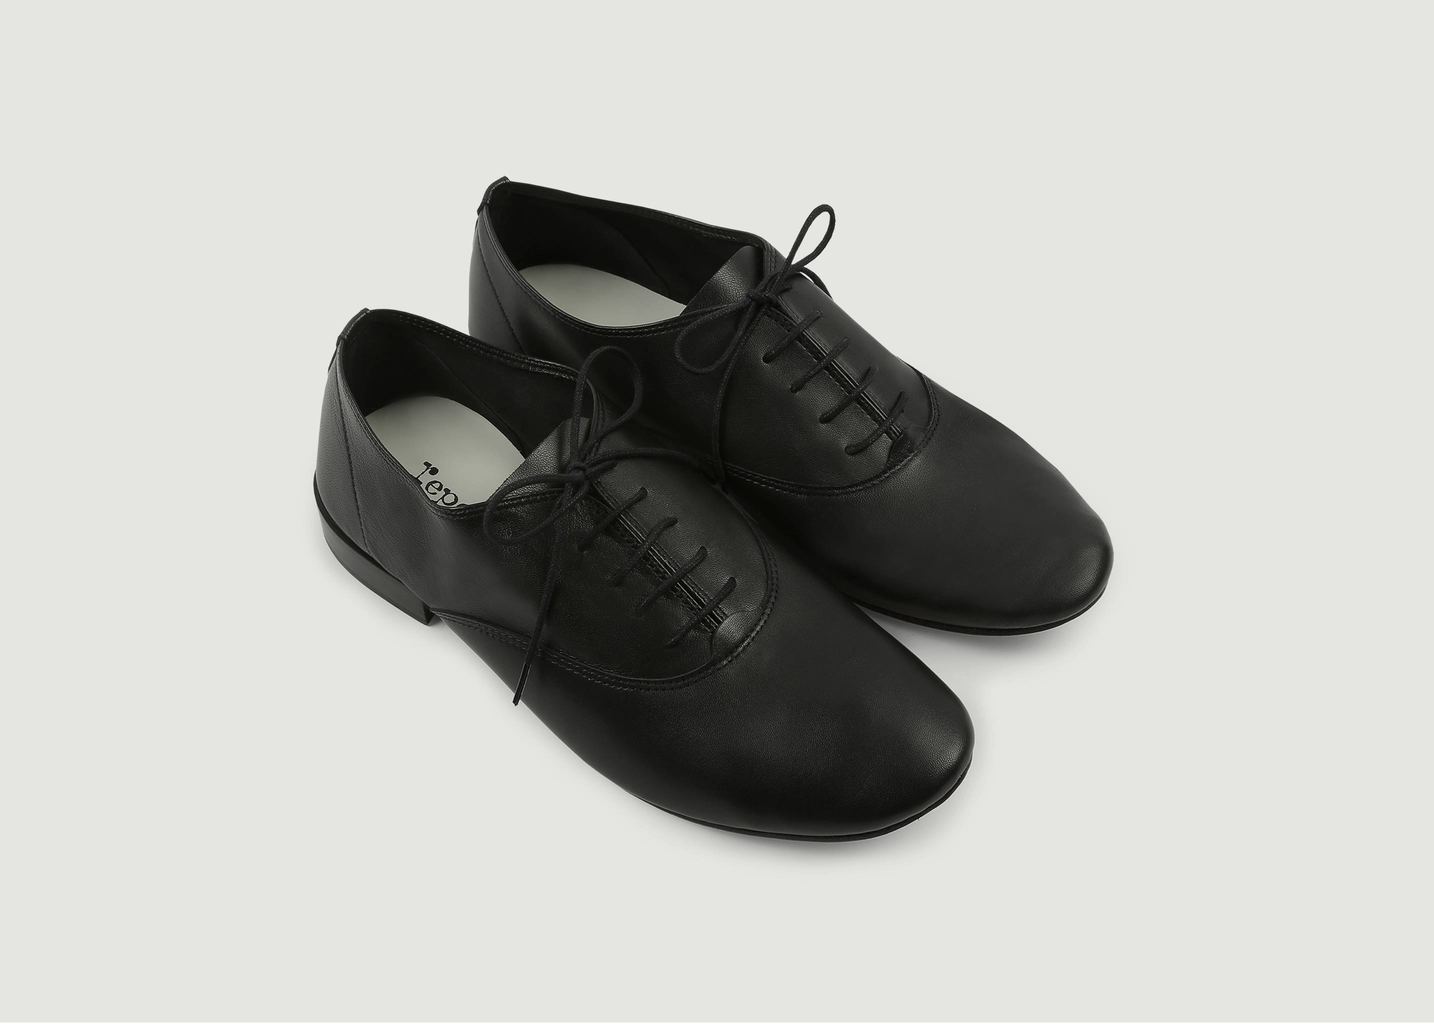 Zizi leather oxfords shoes - Repetto